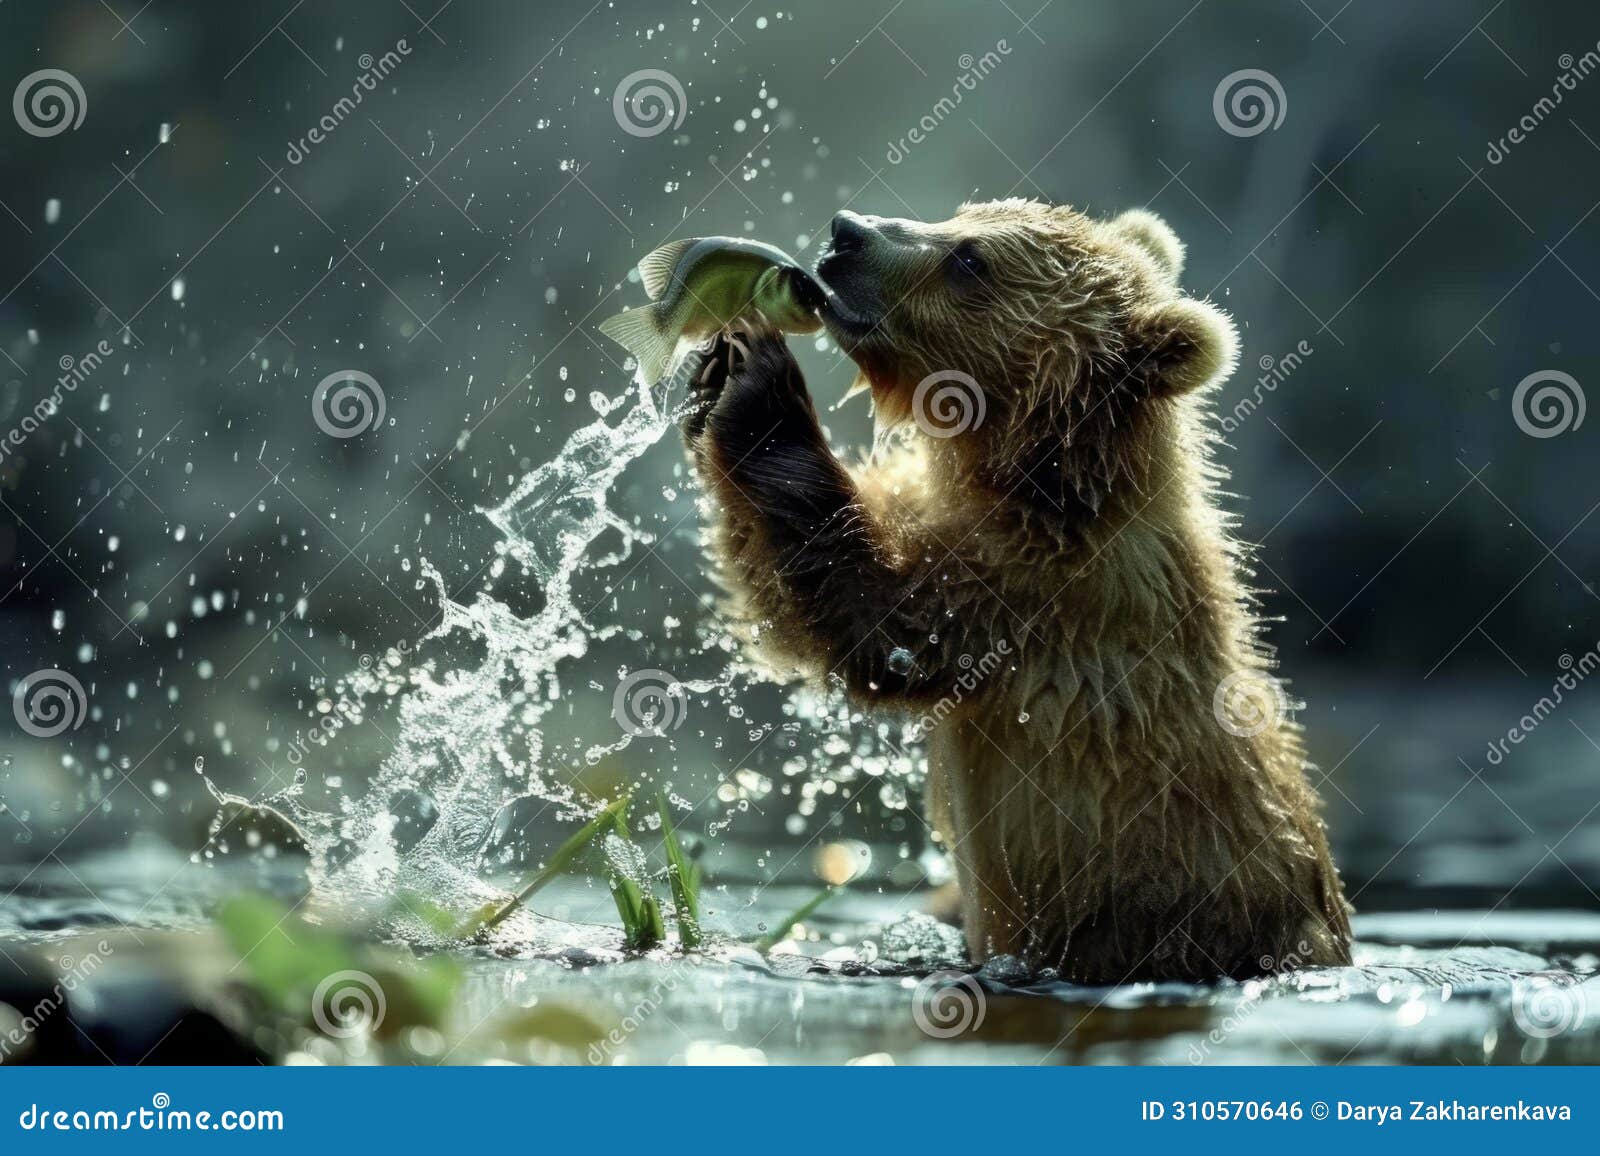 bear catching fish: national geographic shot